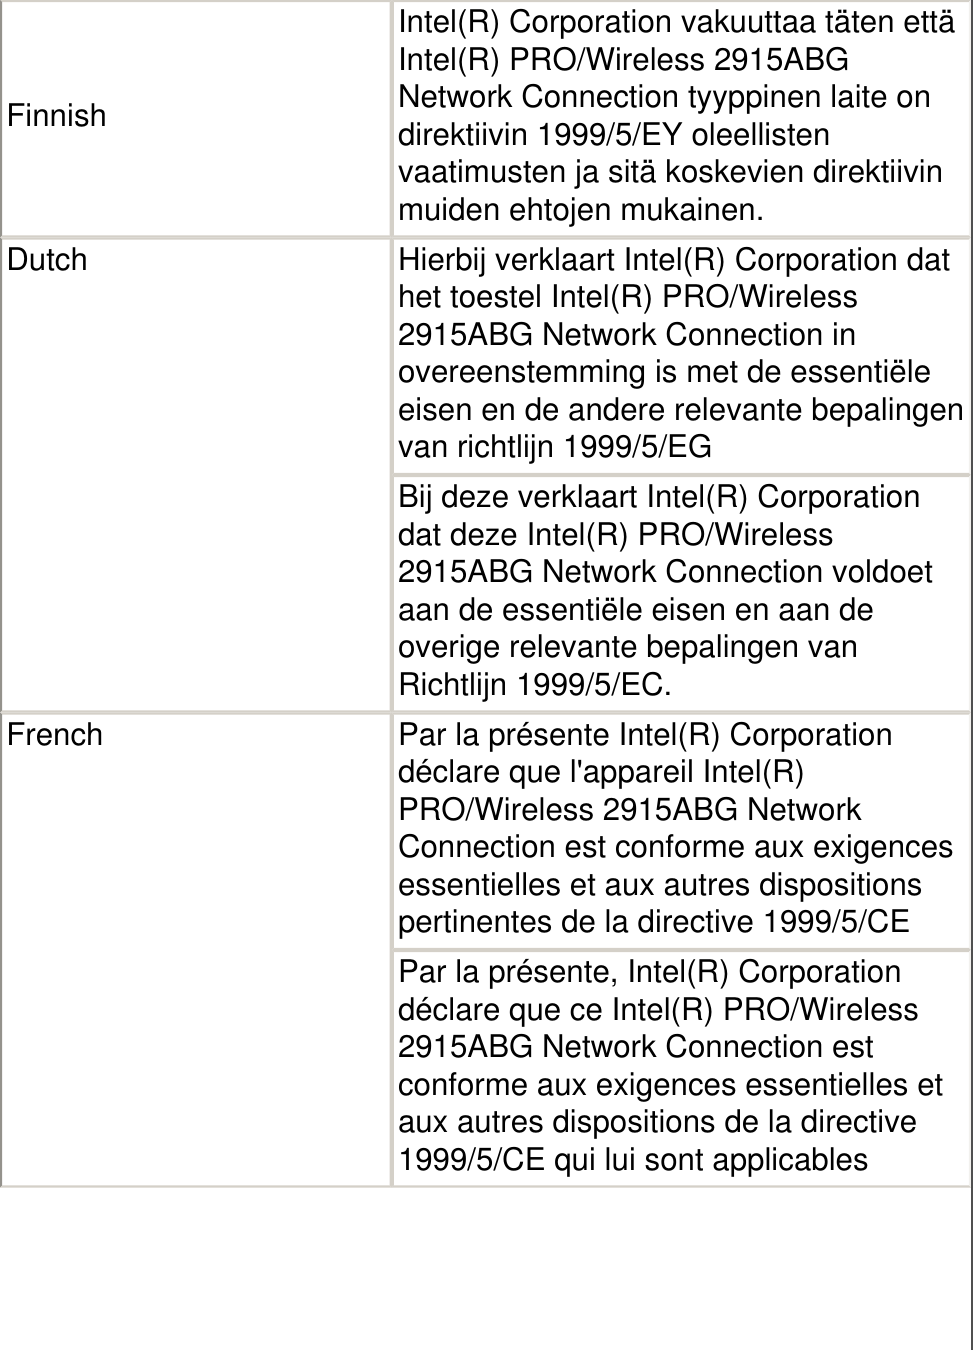 FinnishIntel(R) Corporation vakuuttaa täten että Intel(R) PRO/Wireless 2915ABG Network Connection tyyppinen laite on direktiivin 1999/5/EY oleellisten vaatimusten ja sitä koskevien direktiivin muiden ehtojen mukainen.Dutch Hierbij verklaart Intel(R) Corporation dat het toestel Intel(R) PRO/Wireless 2915ABG Network Connection in overeenstemming is met de essentiële eisen en de andere relevante bepalingen van richtlijn 1999/5/EG Bij deze verklaart Intel(R) Corporation dat deze Intel(R) PRO/Wireless 2915ABG Network Connection voldoet aan de essentiële eisen en aan de overige relevante bepalingen van Richtlijn 1999/5/EC.French Par la présente Intel(R) Corporation déclare que l&apos;appareil Intel(R) PRO/Wireless 2915ABG Network Connection est conforme aux exigences essentielles et aux autres dispositions pertinentes de la directive 1999/5/CEPar la présente, Intel(R) Corporation déclare que ce Intel(R) PRO/Wireless 2915ABG Network Connection est conforme aux exigences essentielles et aux autres dispositions de la directive 1999/5/CE qui lui sont applicables